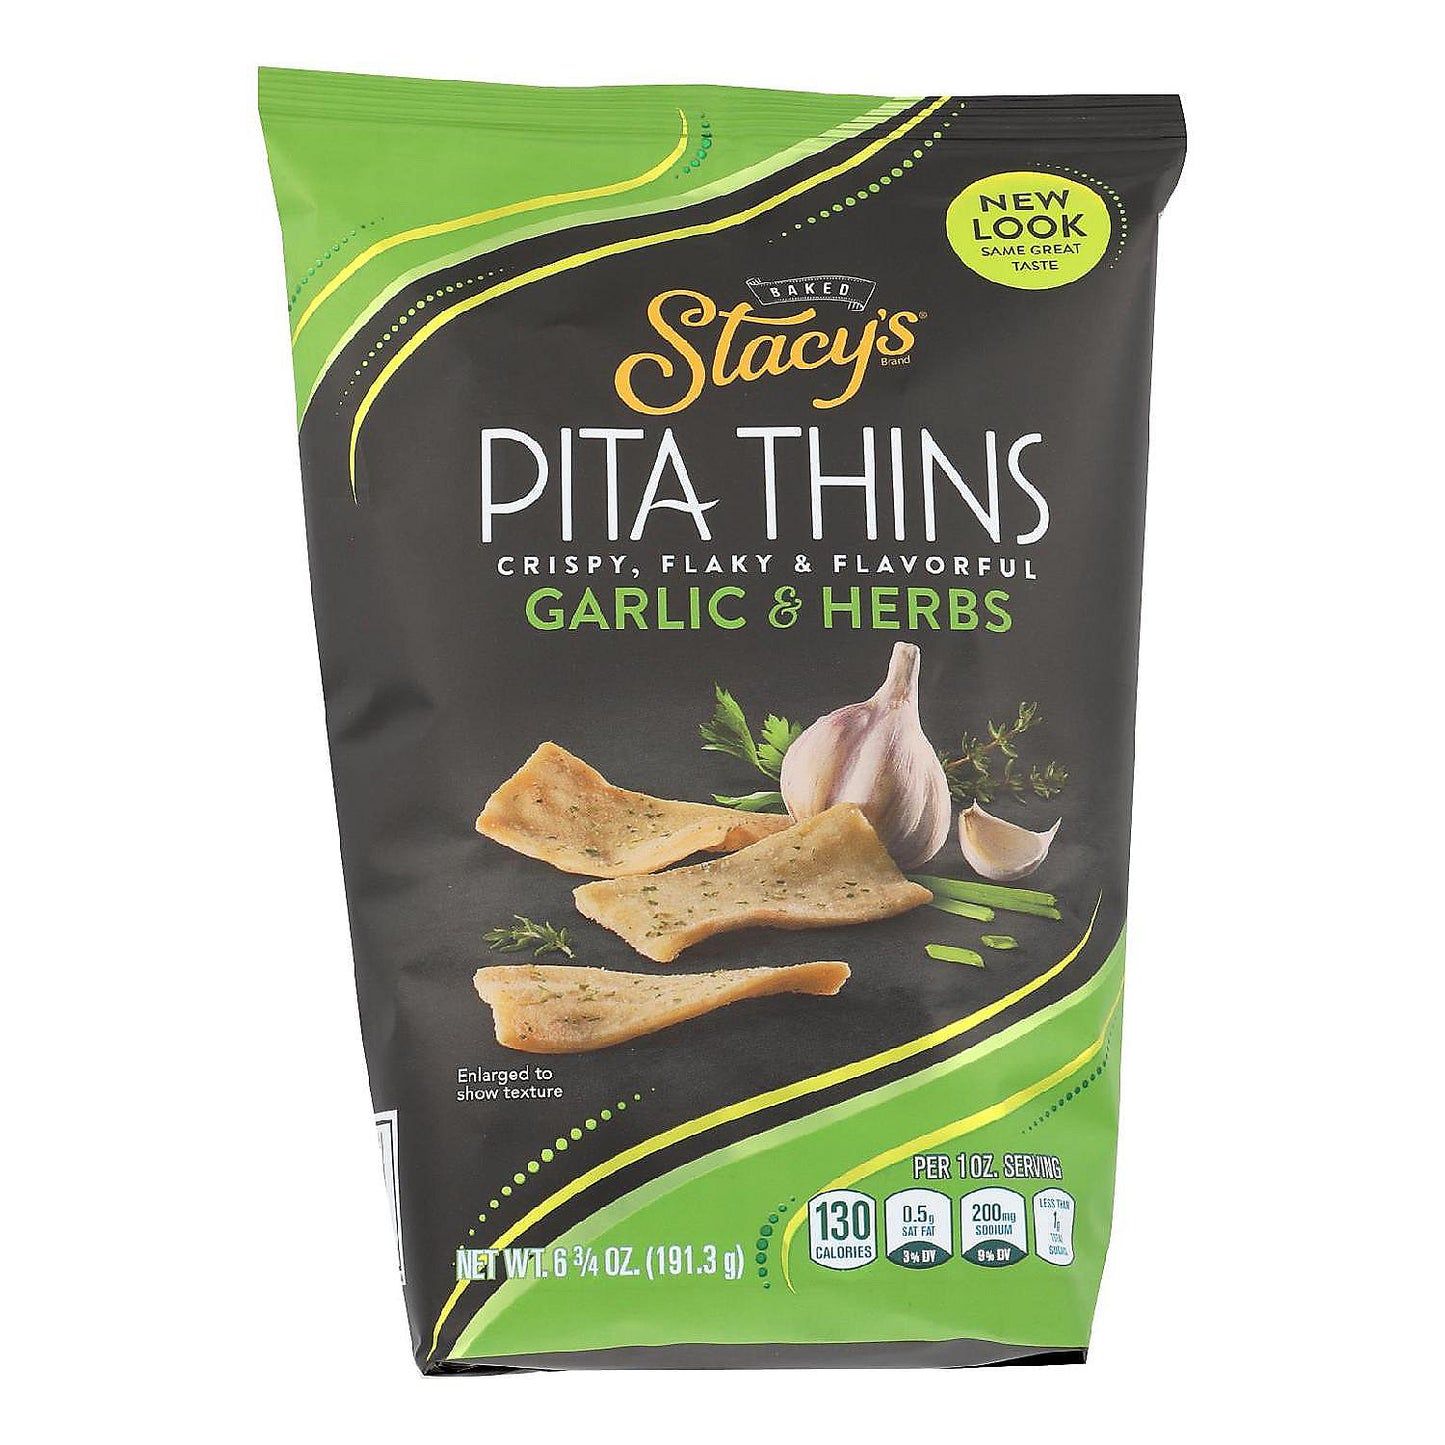 Stacy's Pita Thins Garlic & Herbs 6 3/4 oz